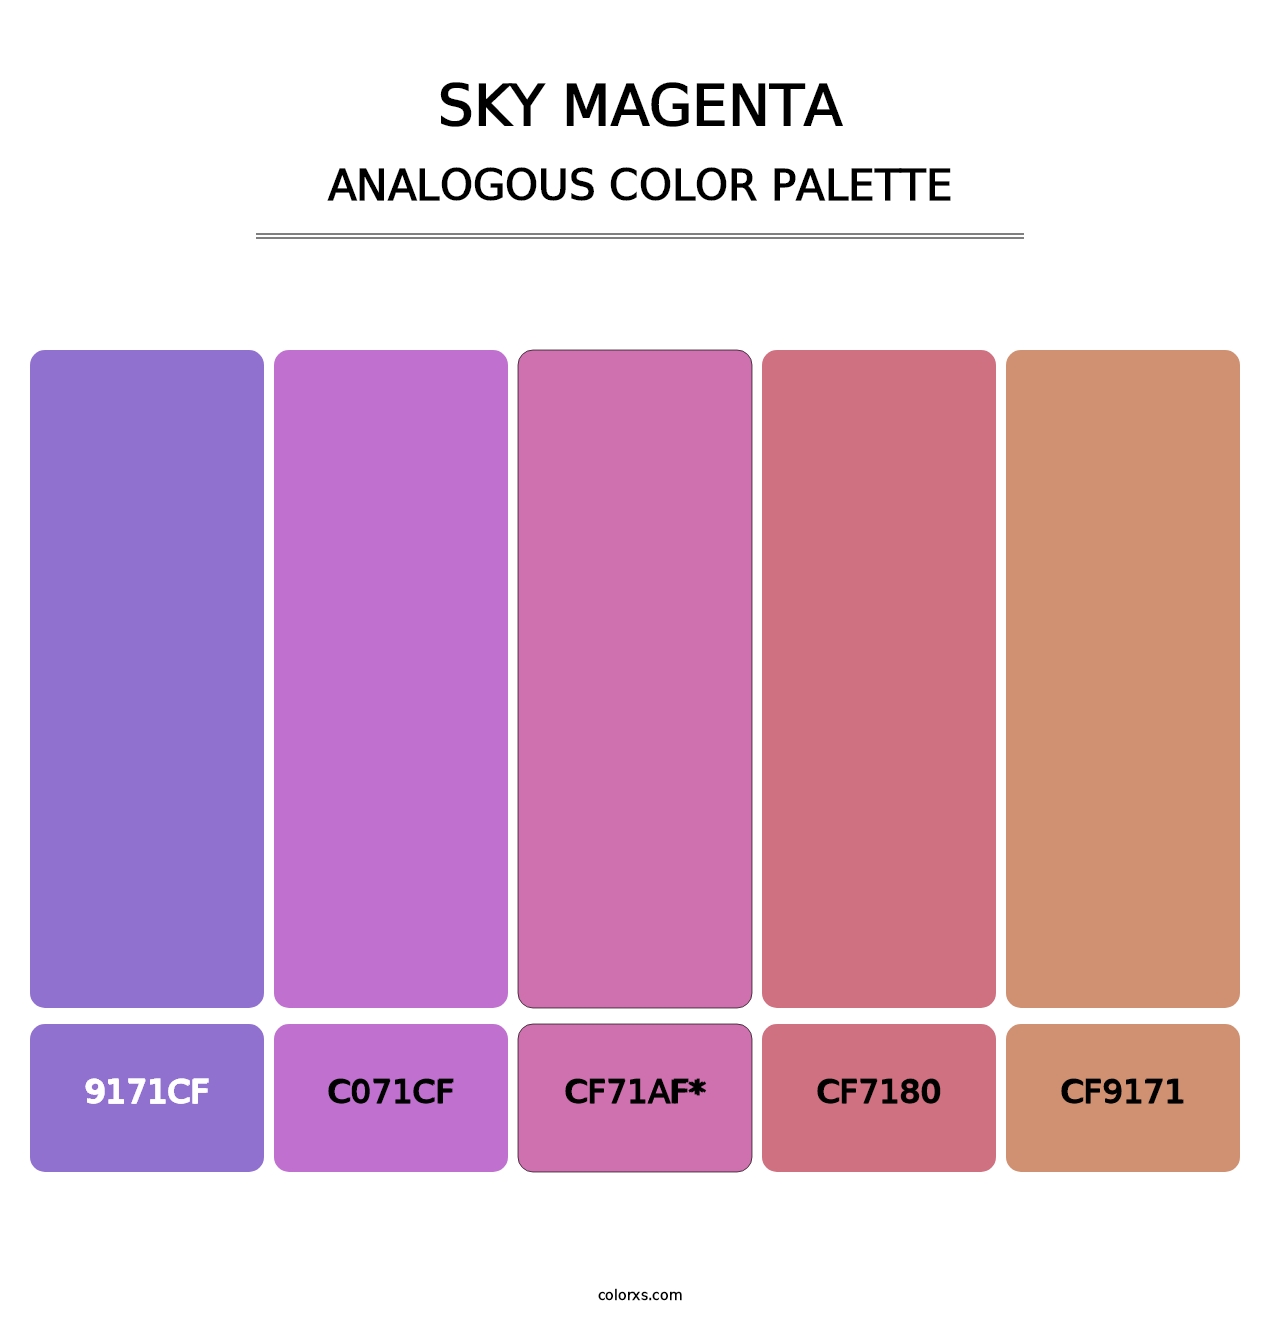 Sky Magenta - Analogous Color Palette